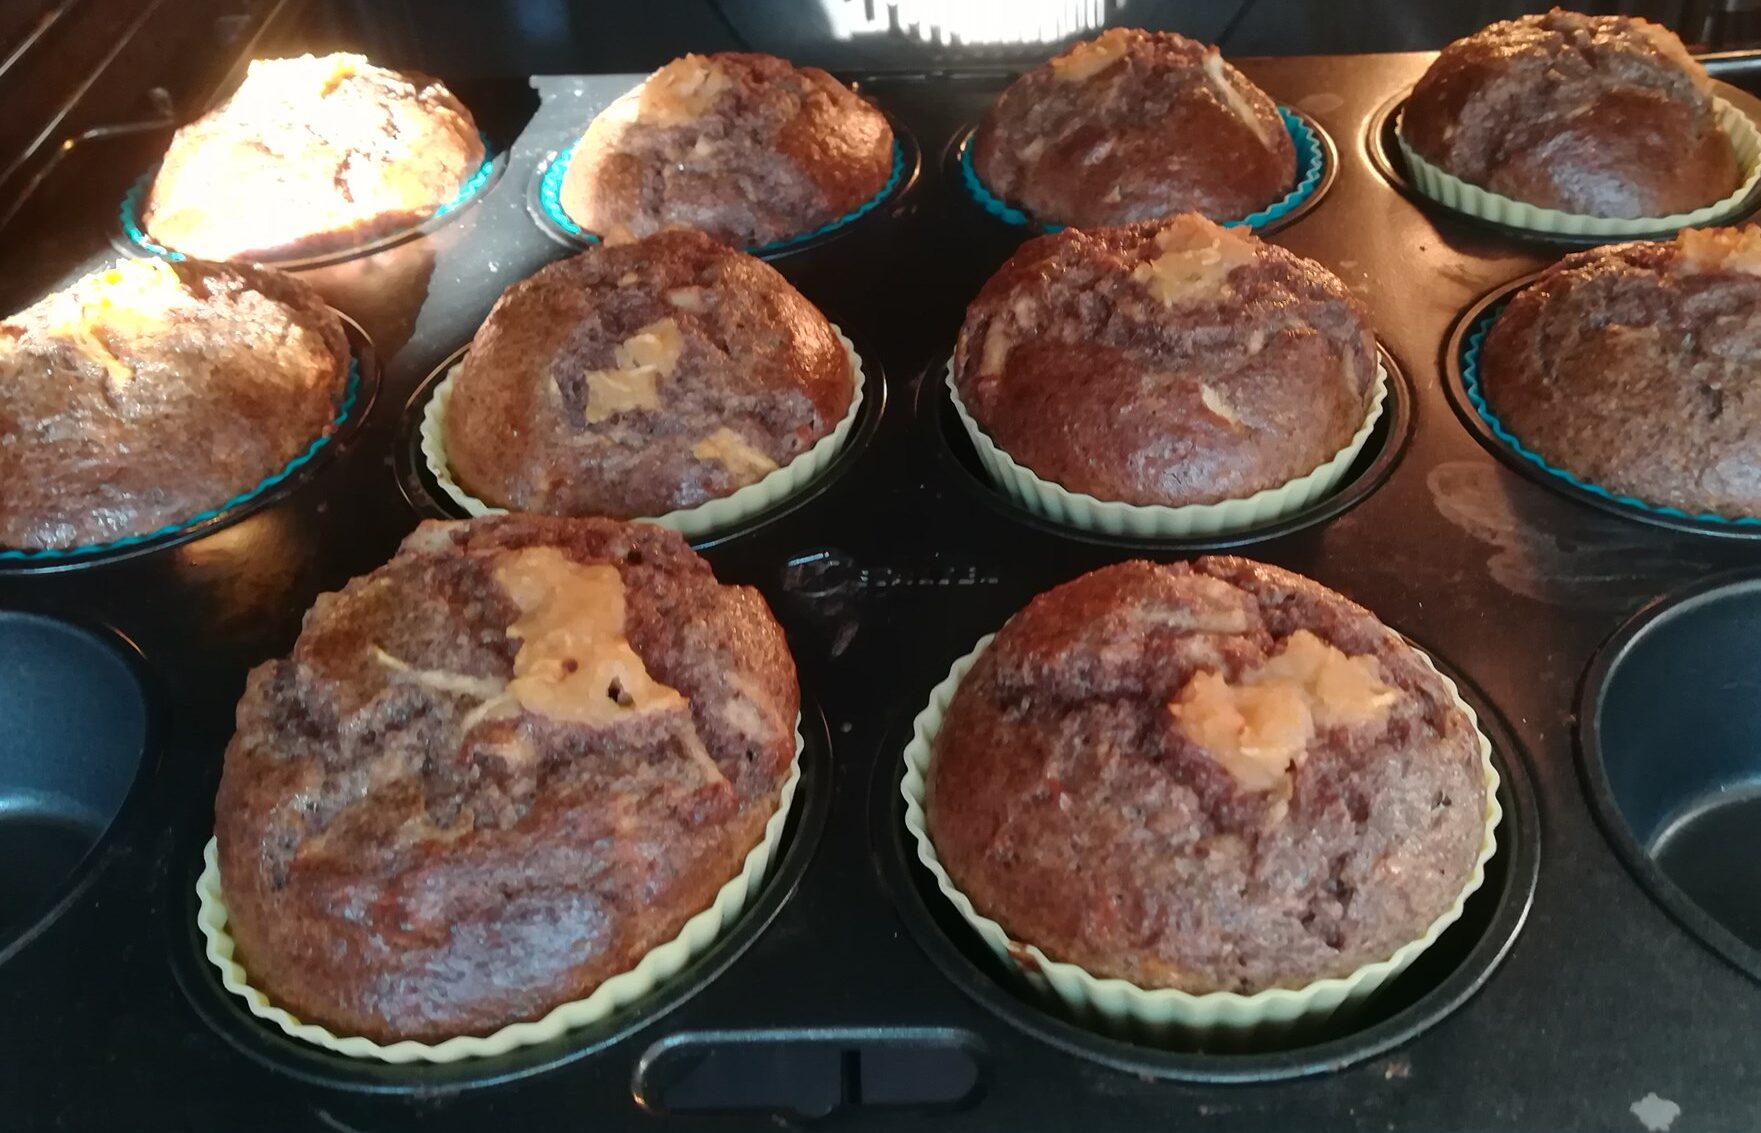 almás - lenmaglisztes muffin